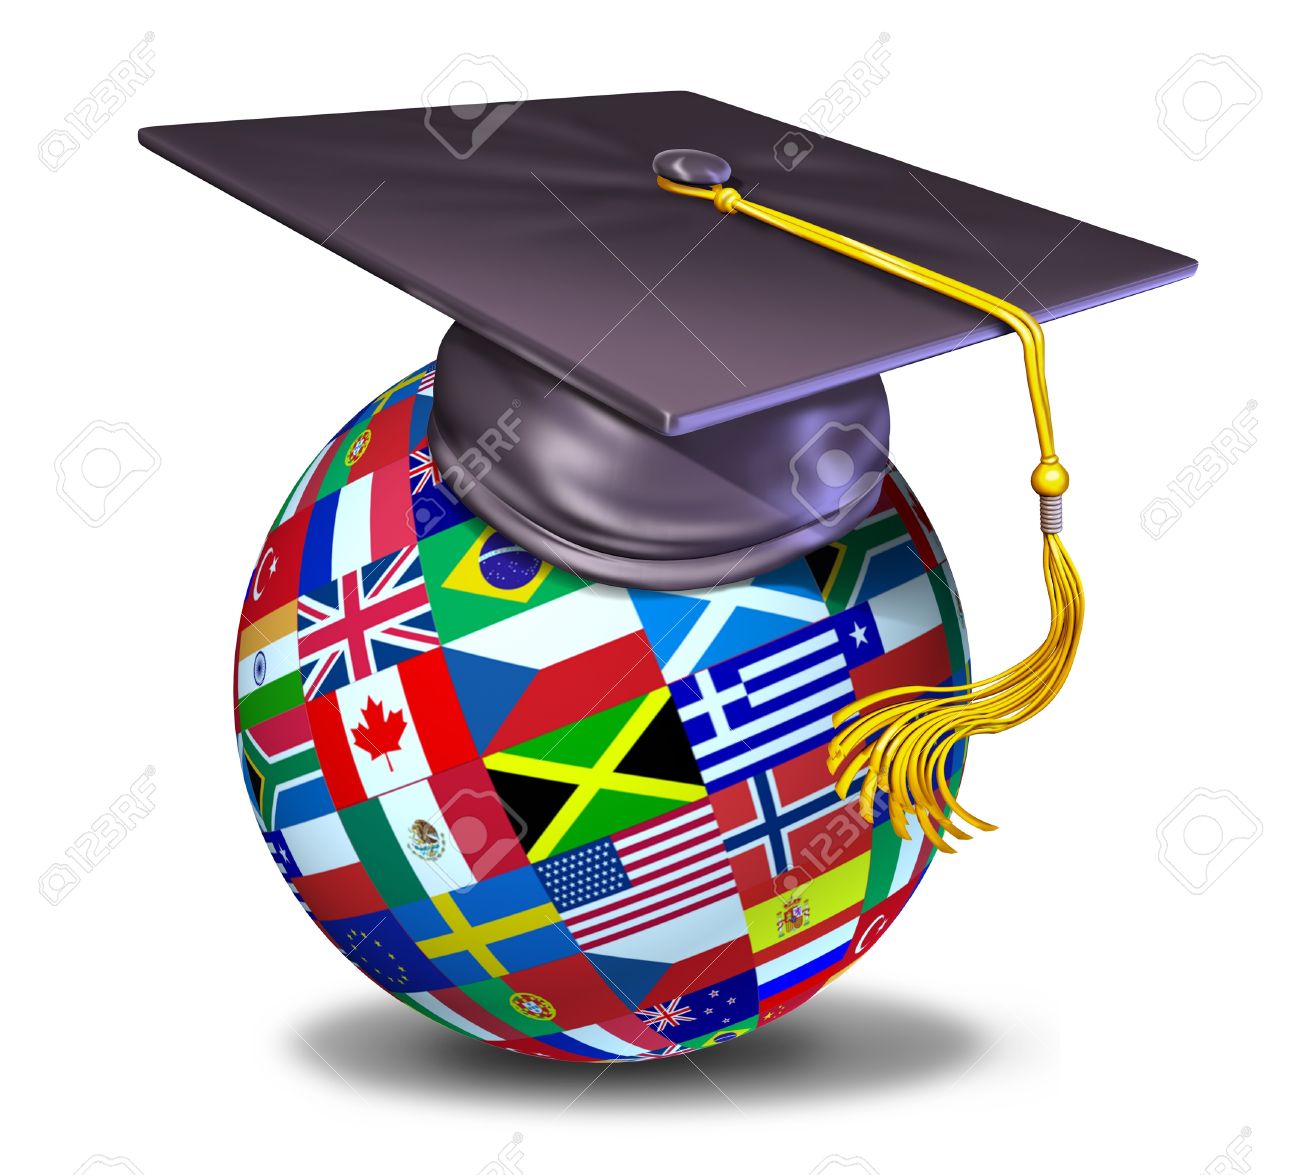 Guest Blog- Pursuing a Course From an International University is Rewarding